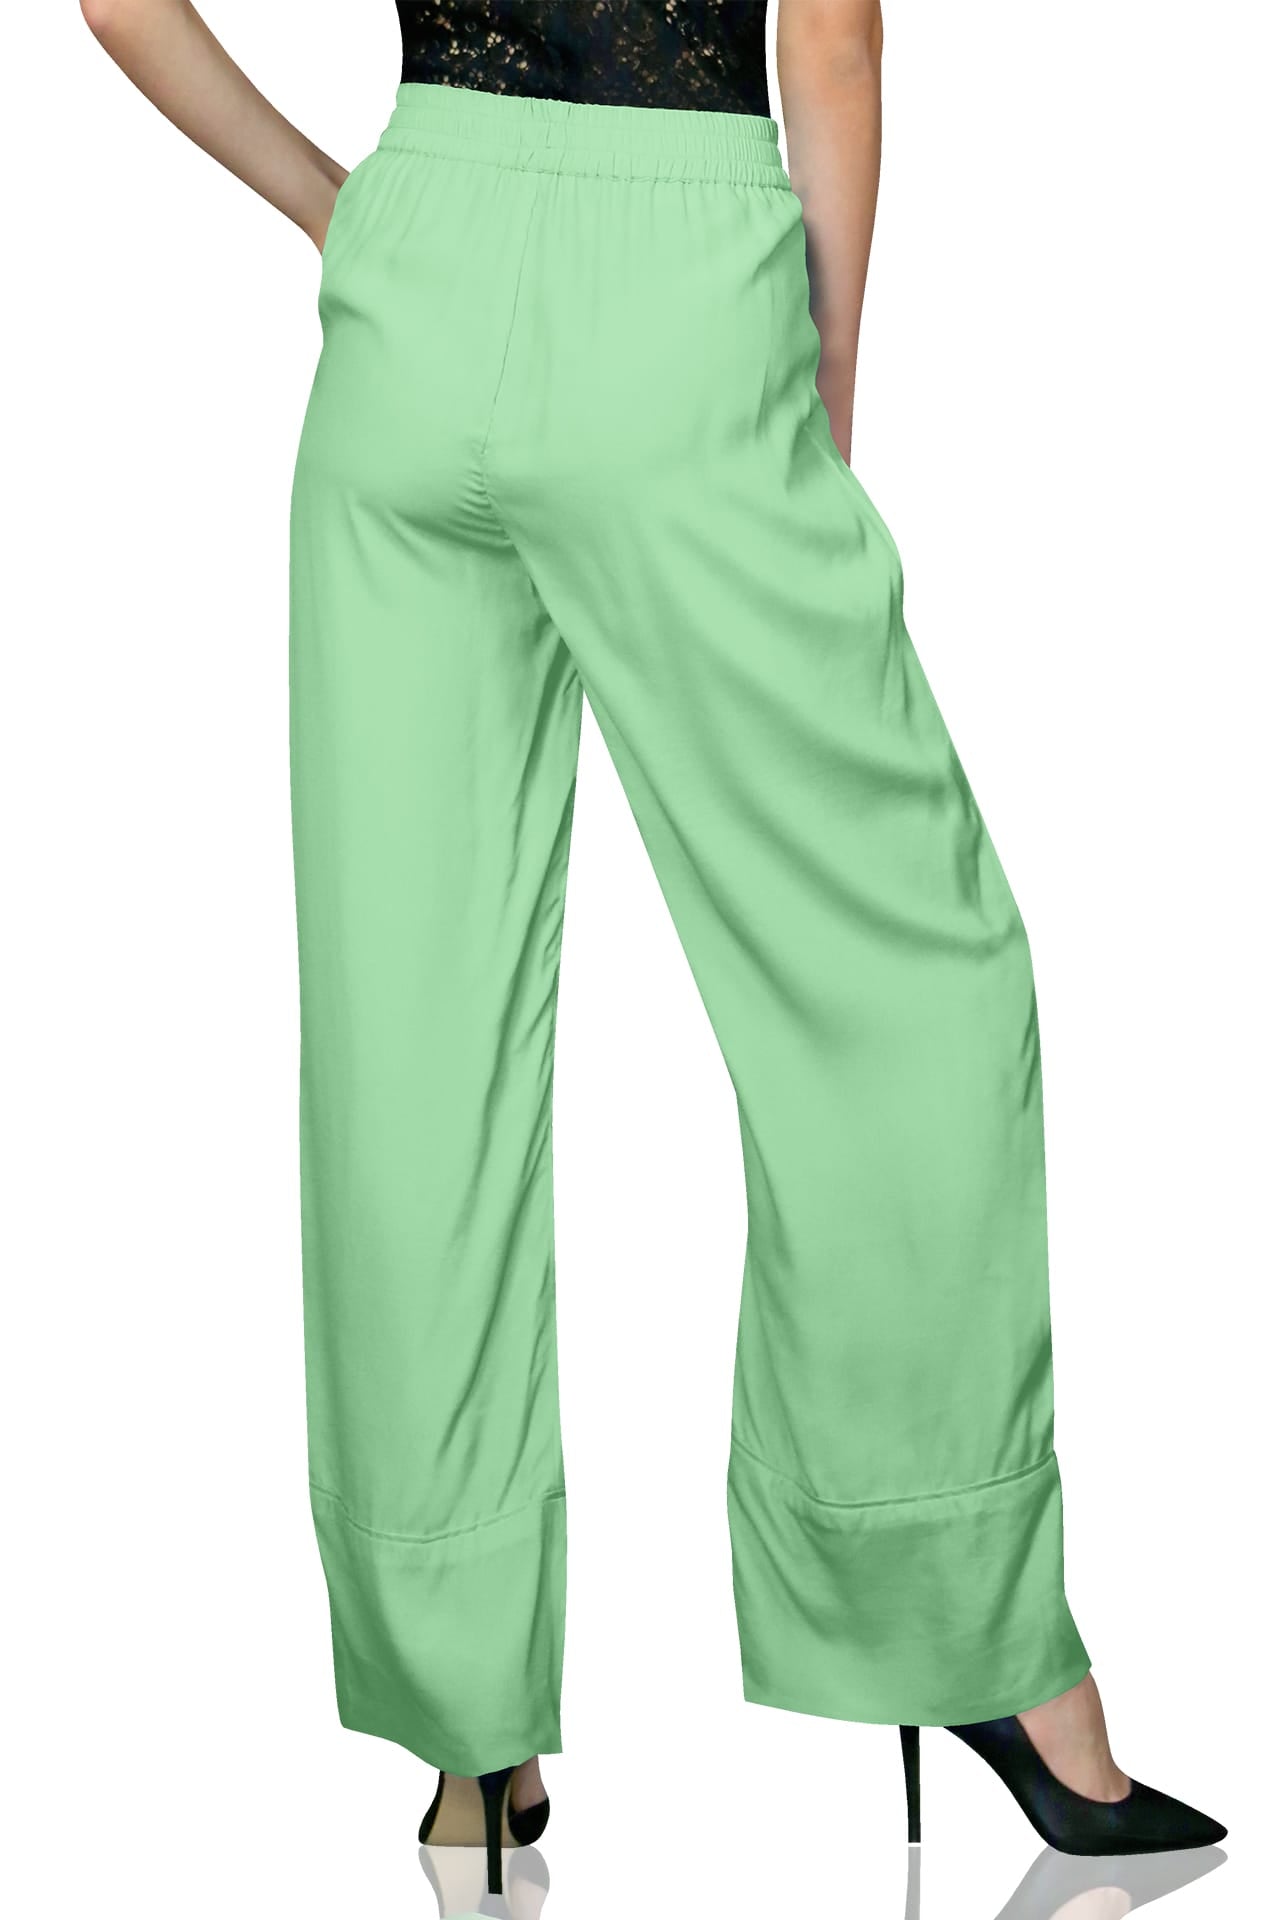 "womens plazzo pants" "green pants for ladies" "straight leg pants women" "Kyle X Shahida"